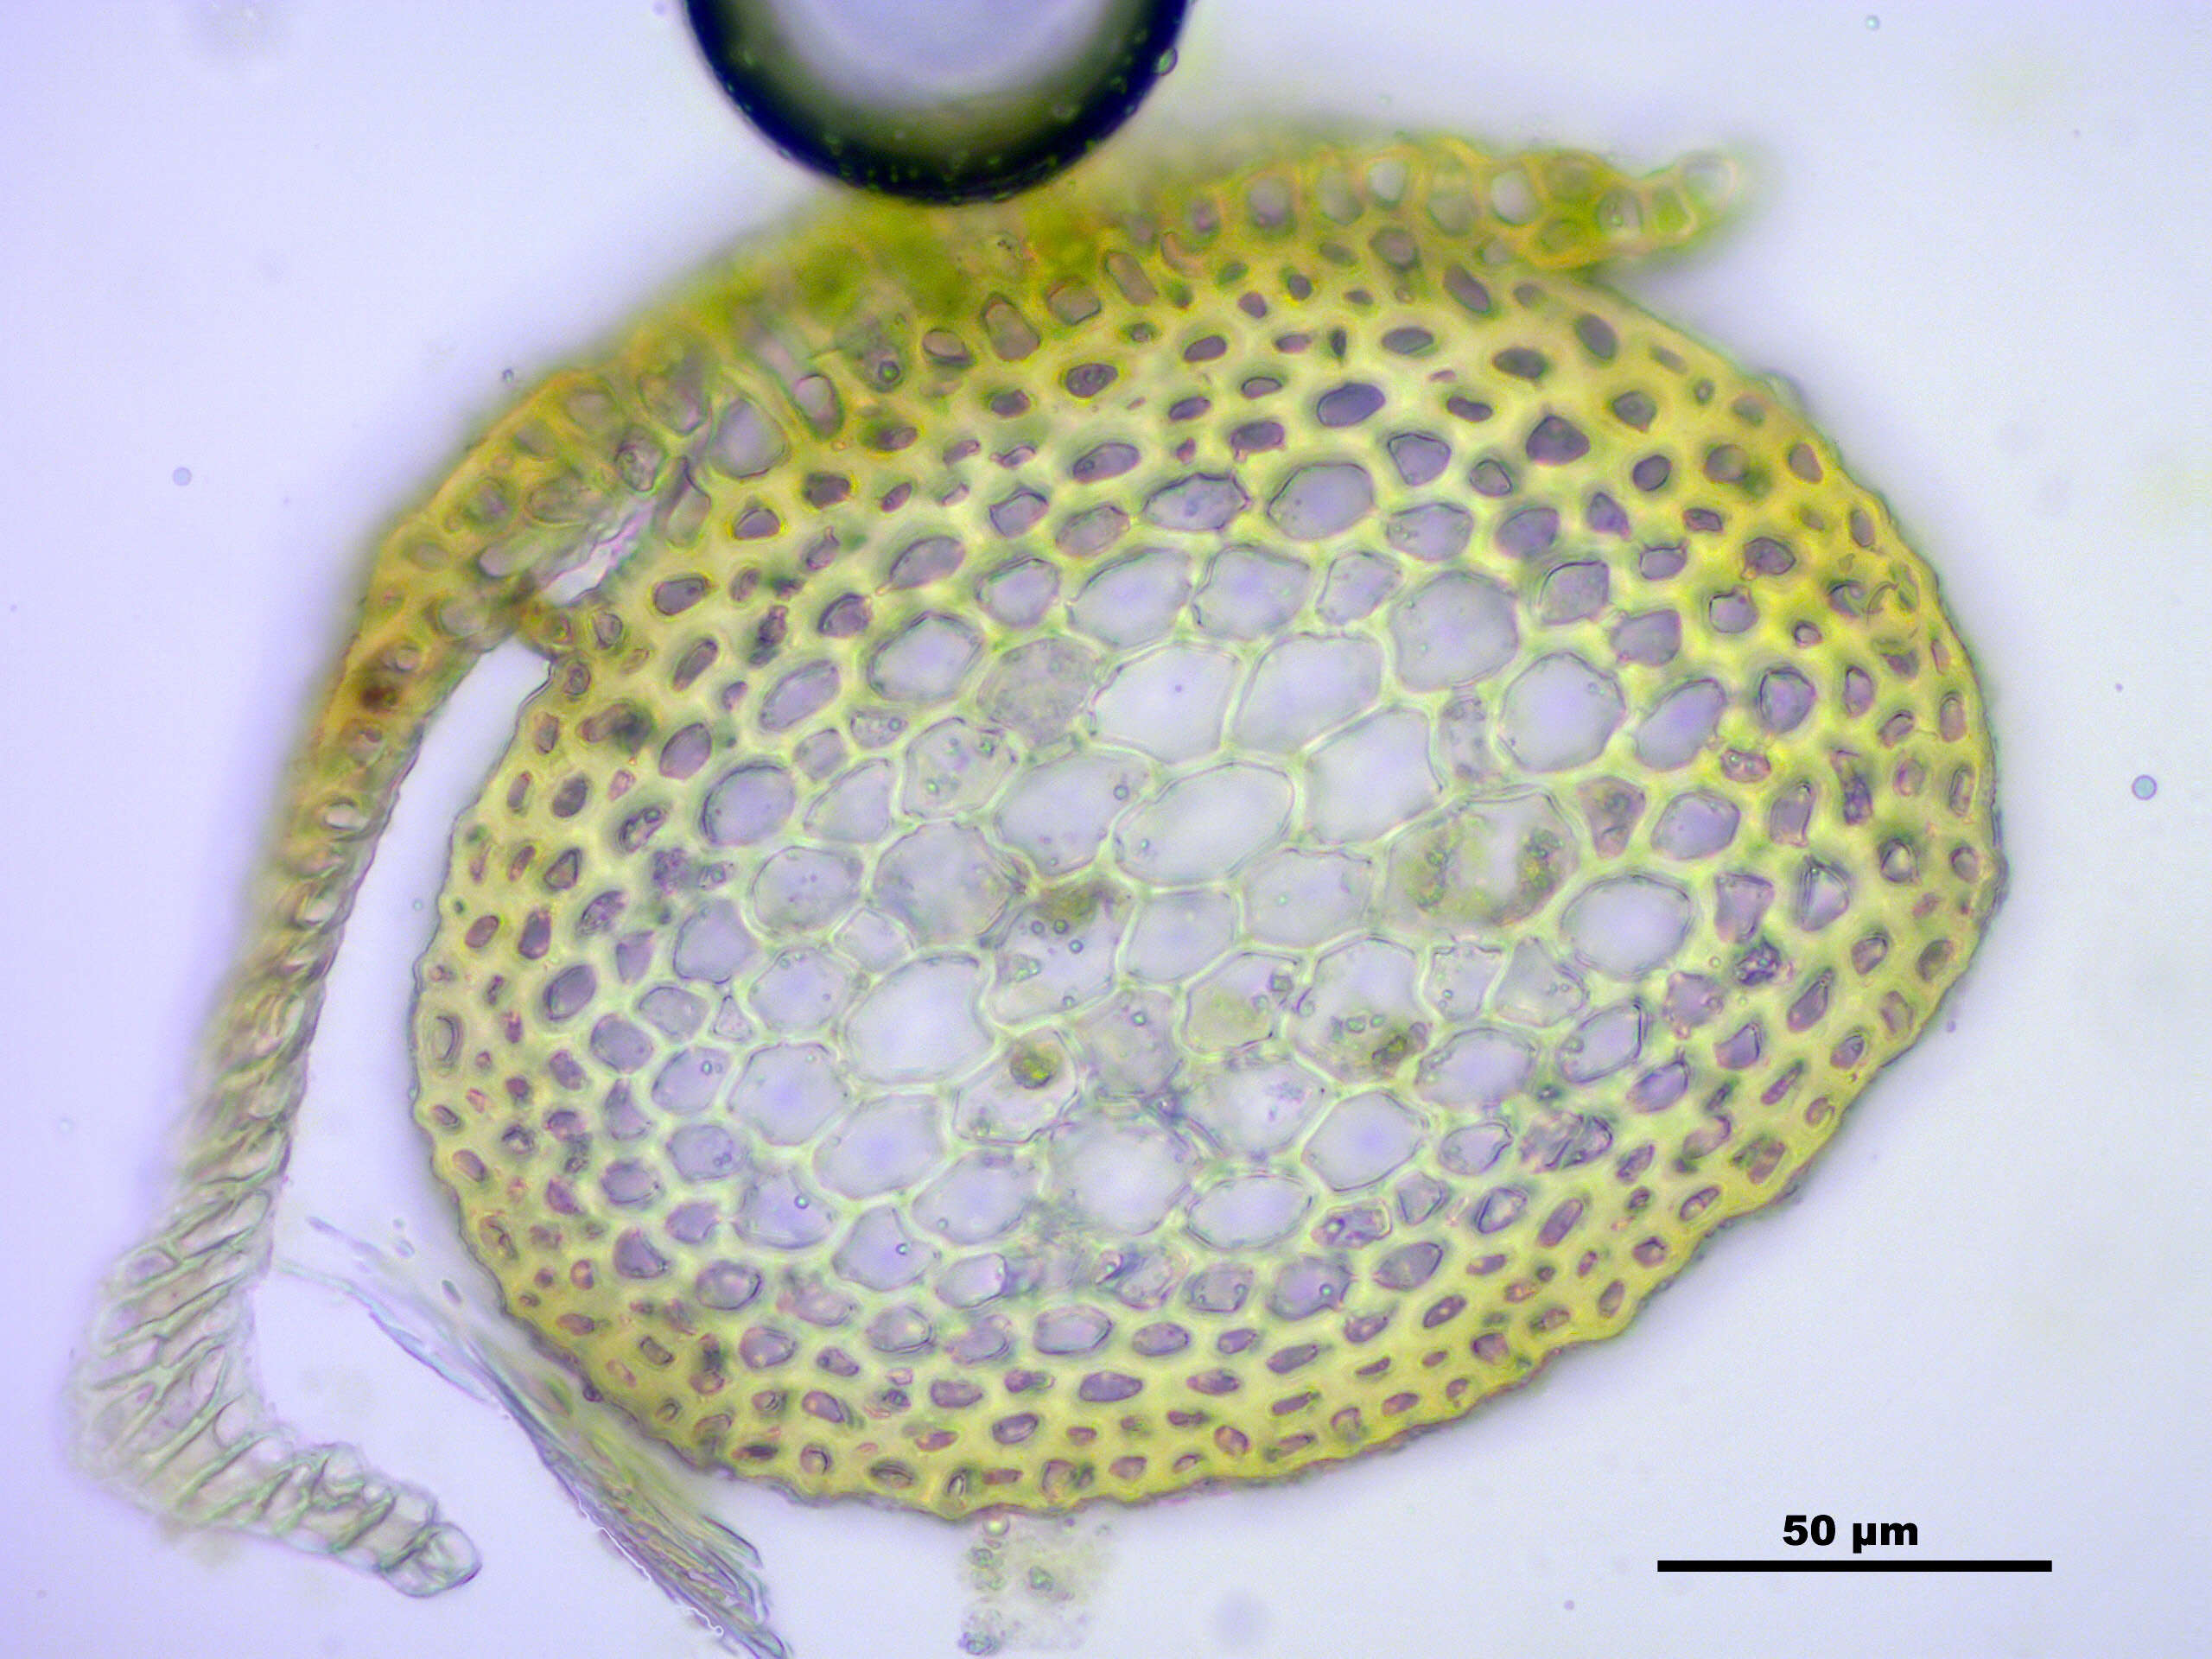 Image of neckera moss